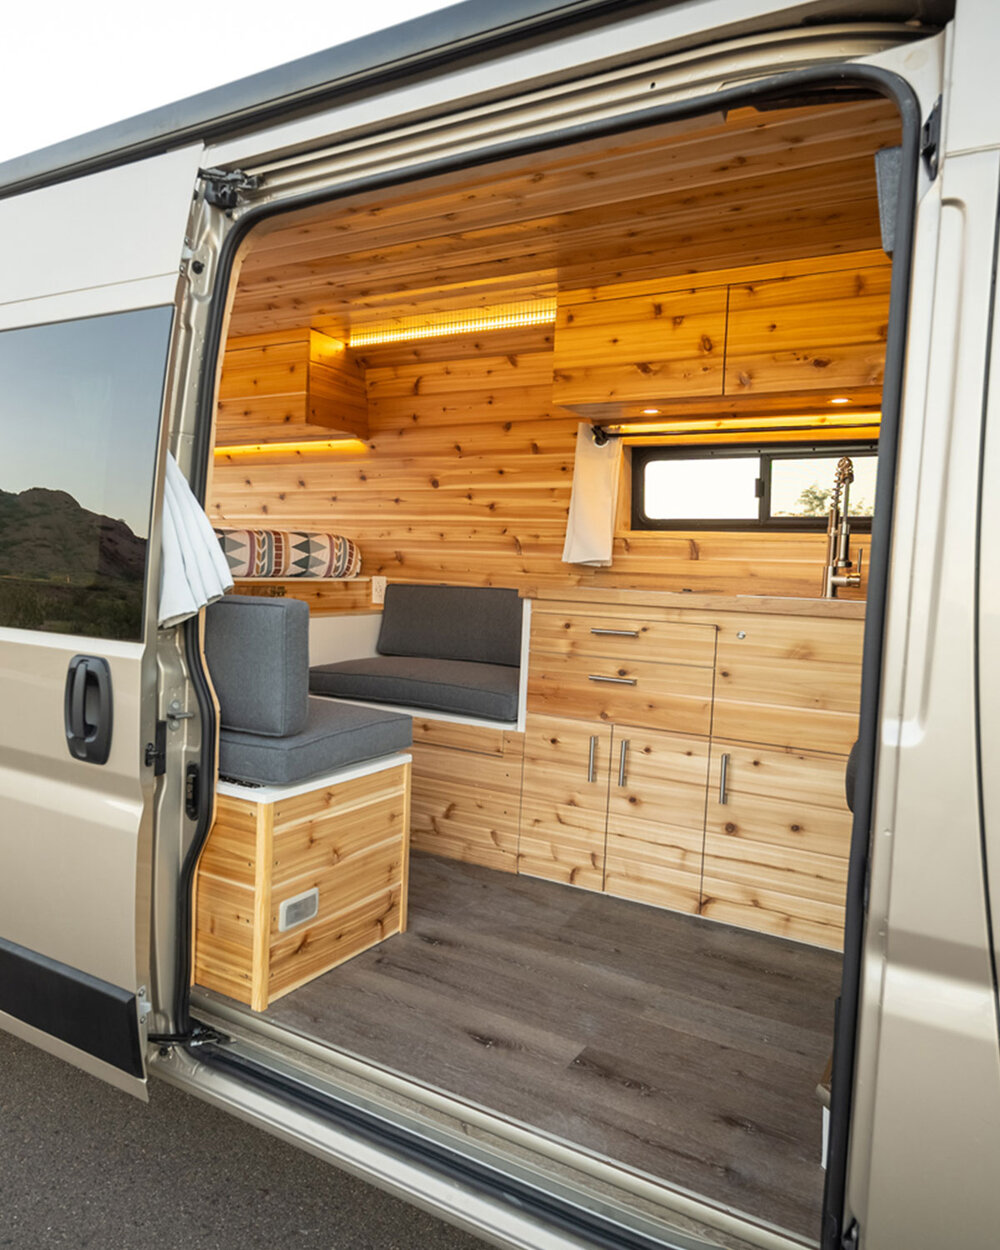 Vans — Boho Camper Vans | Camper Vans Built in Arizona